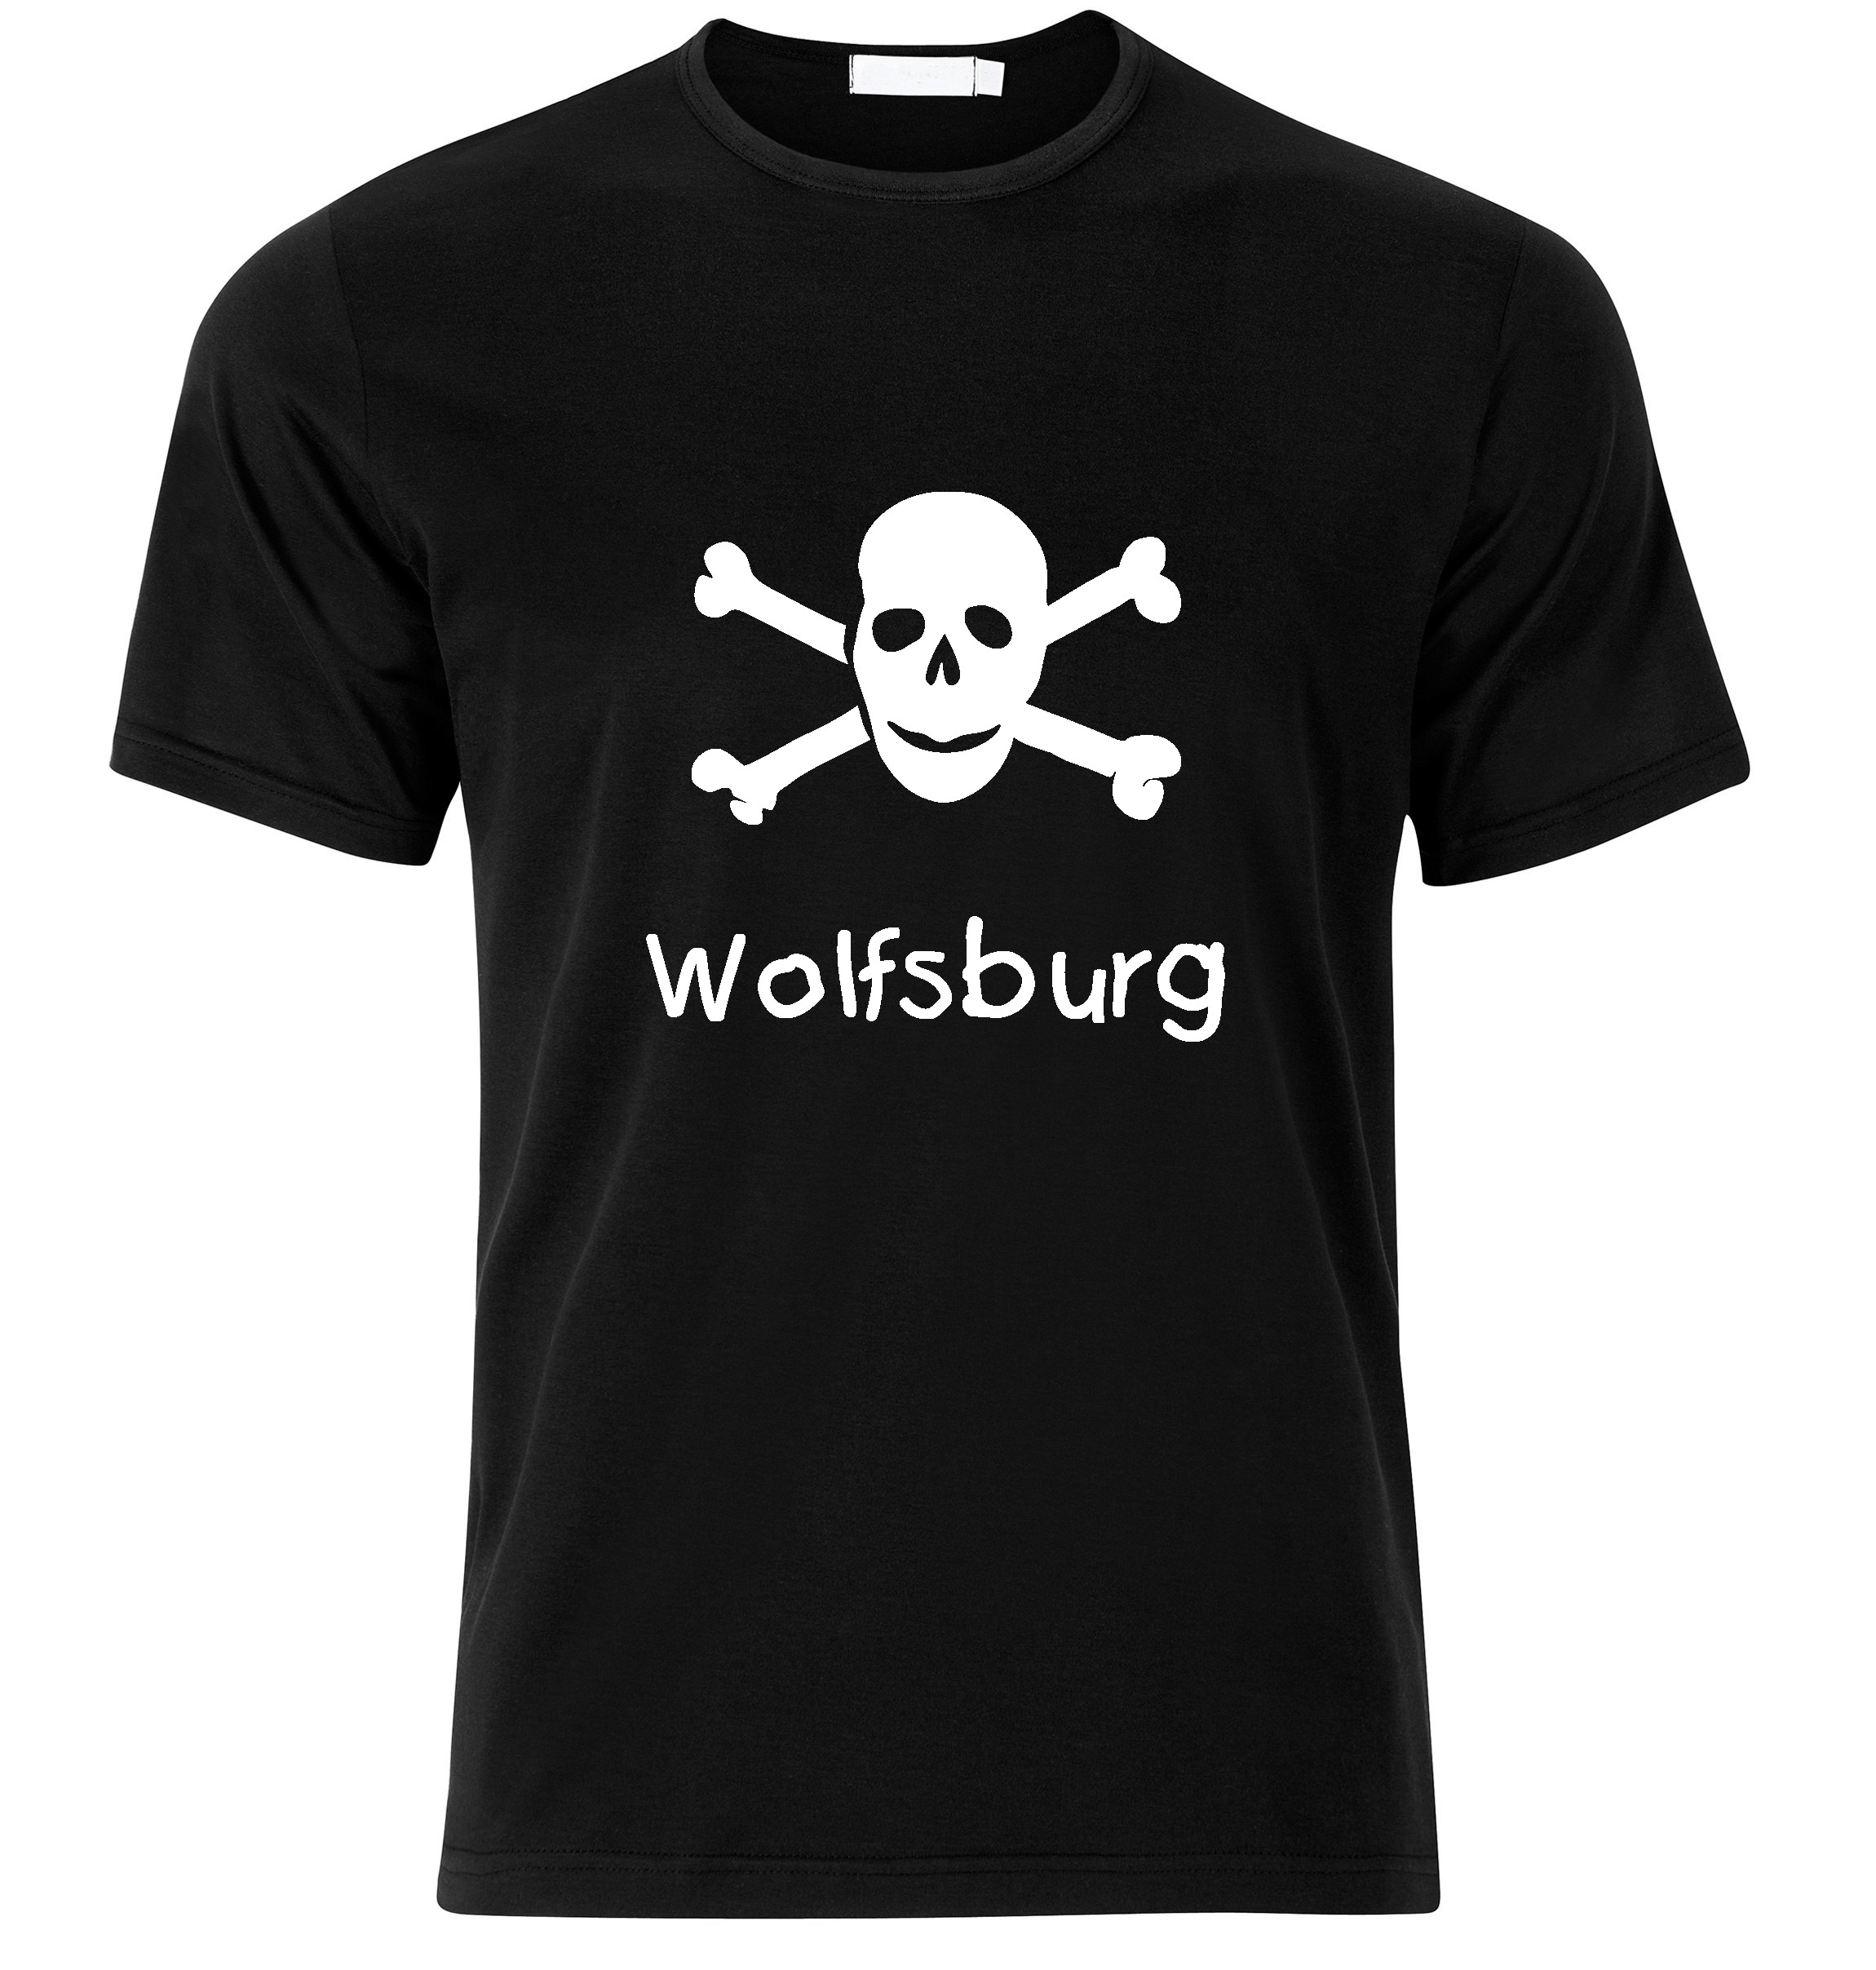 T-Shirt Wolfsburg Jolly Roger, Totenkopf